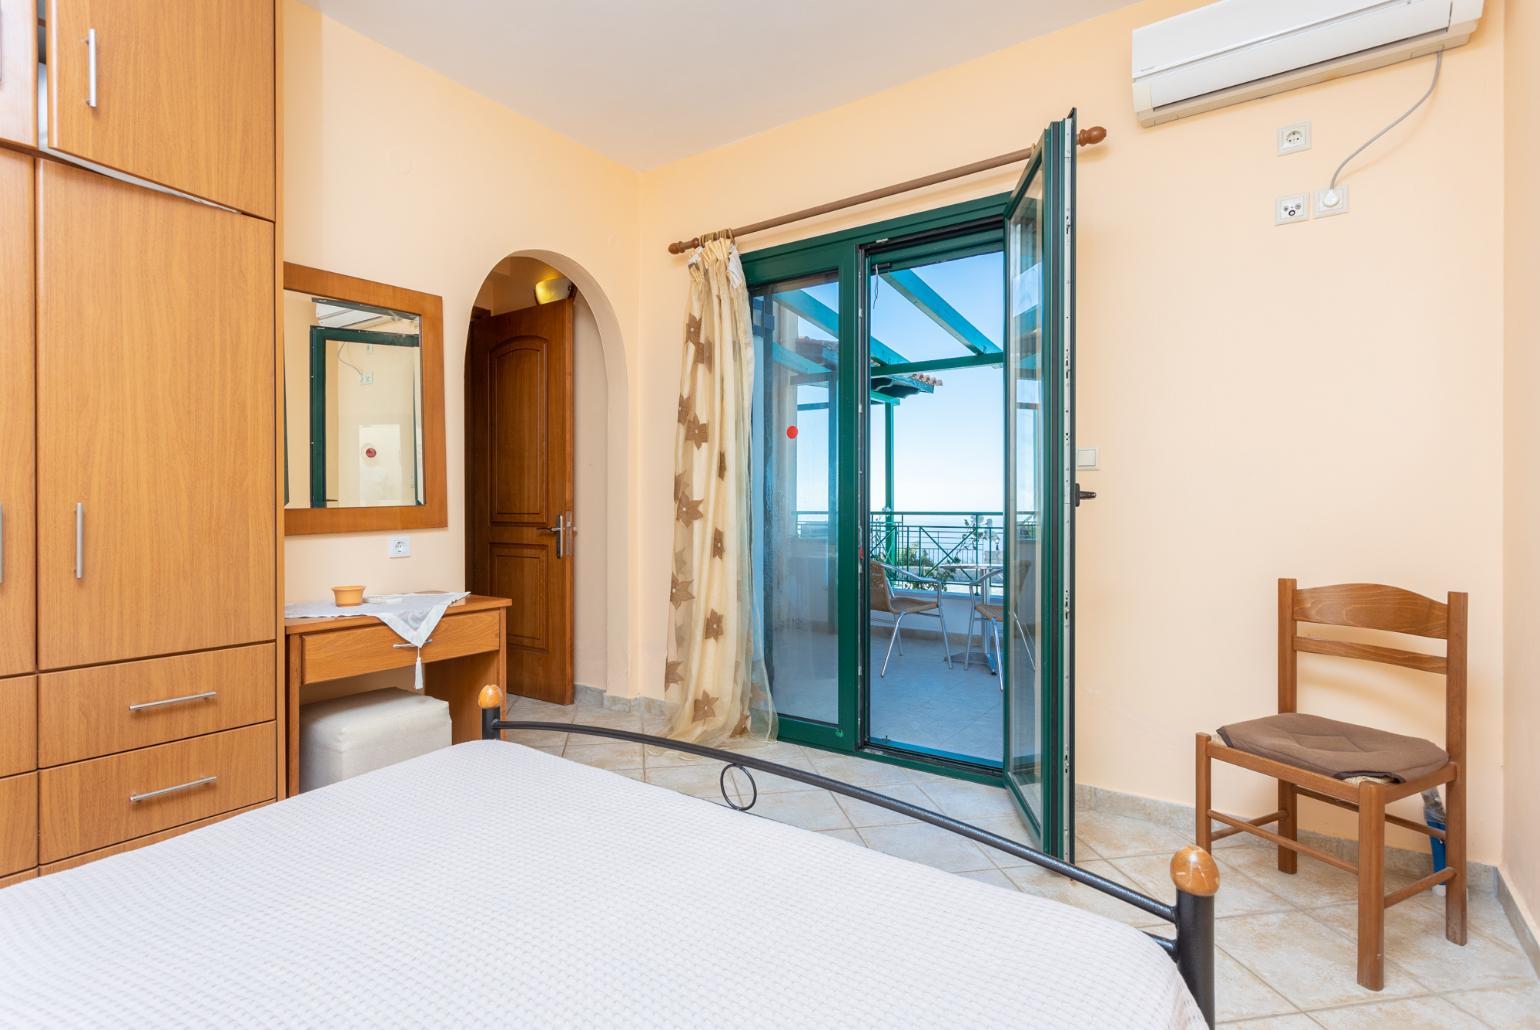 Double bedroom with en suite bathroom, A/C, sea views, and terrace access